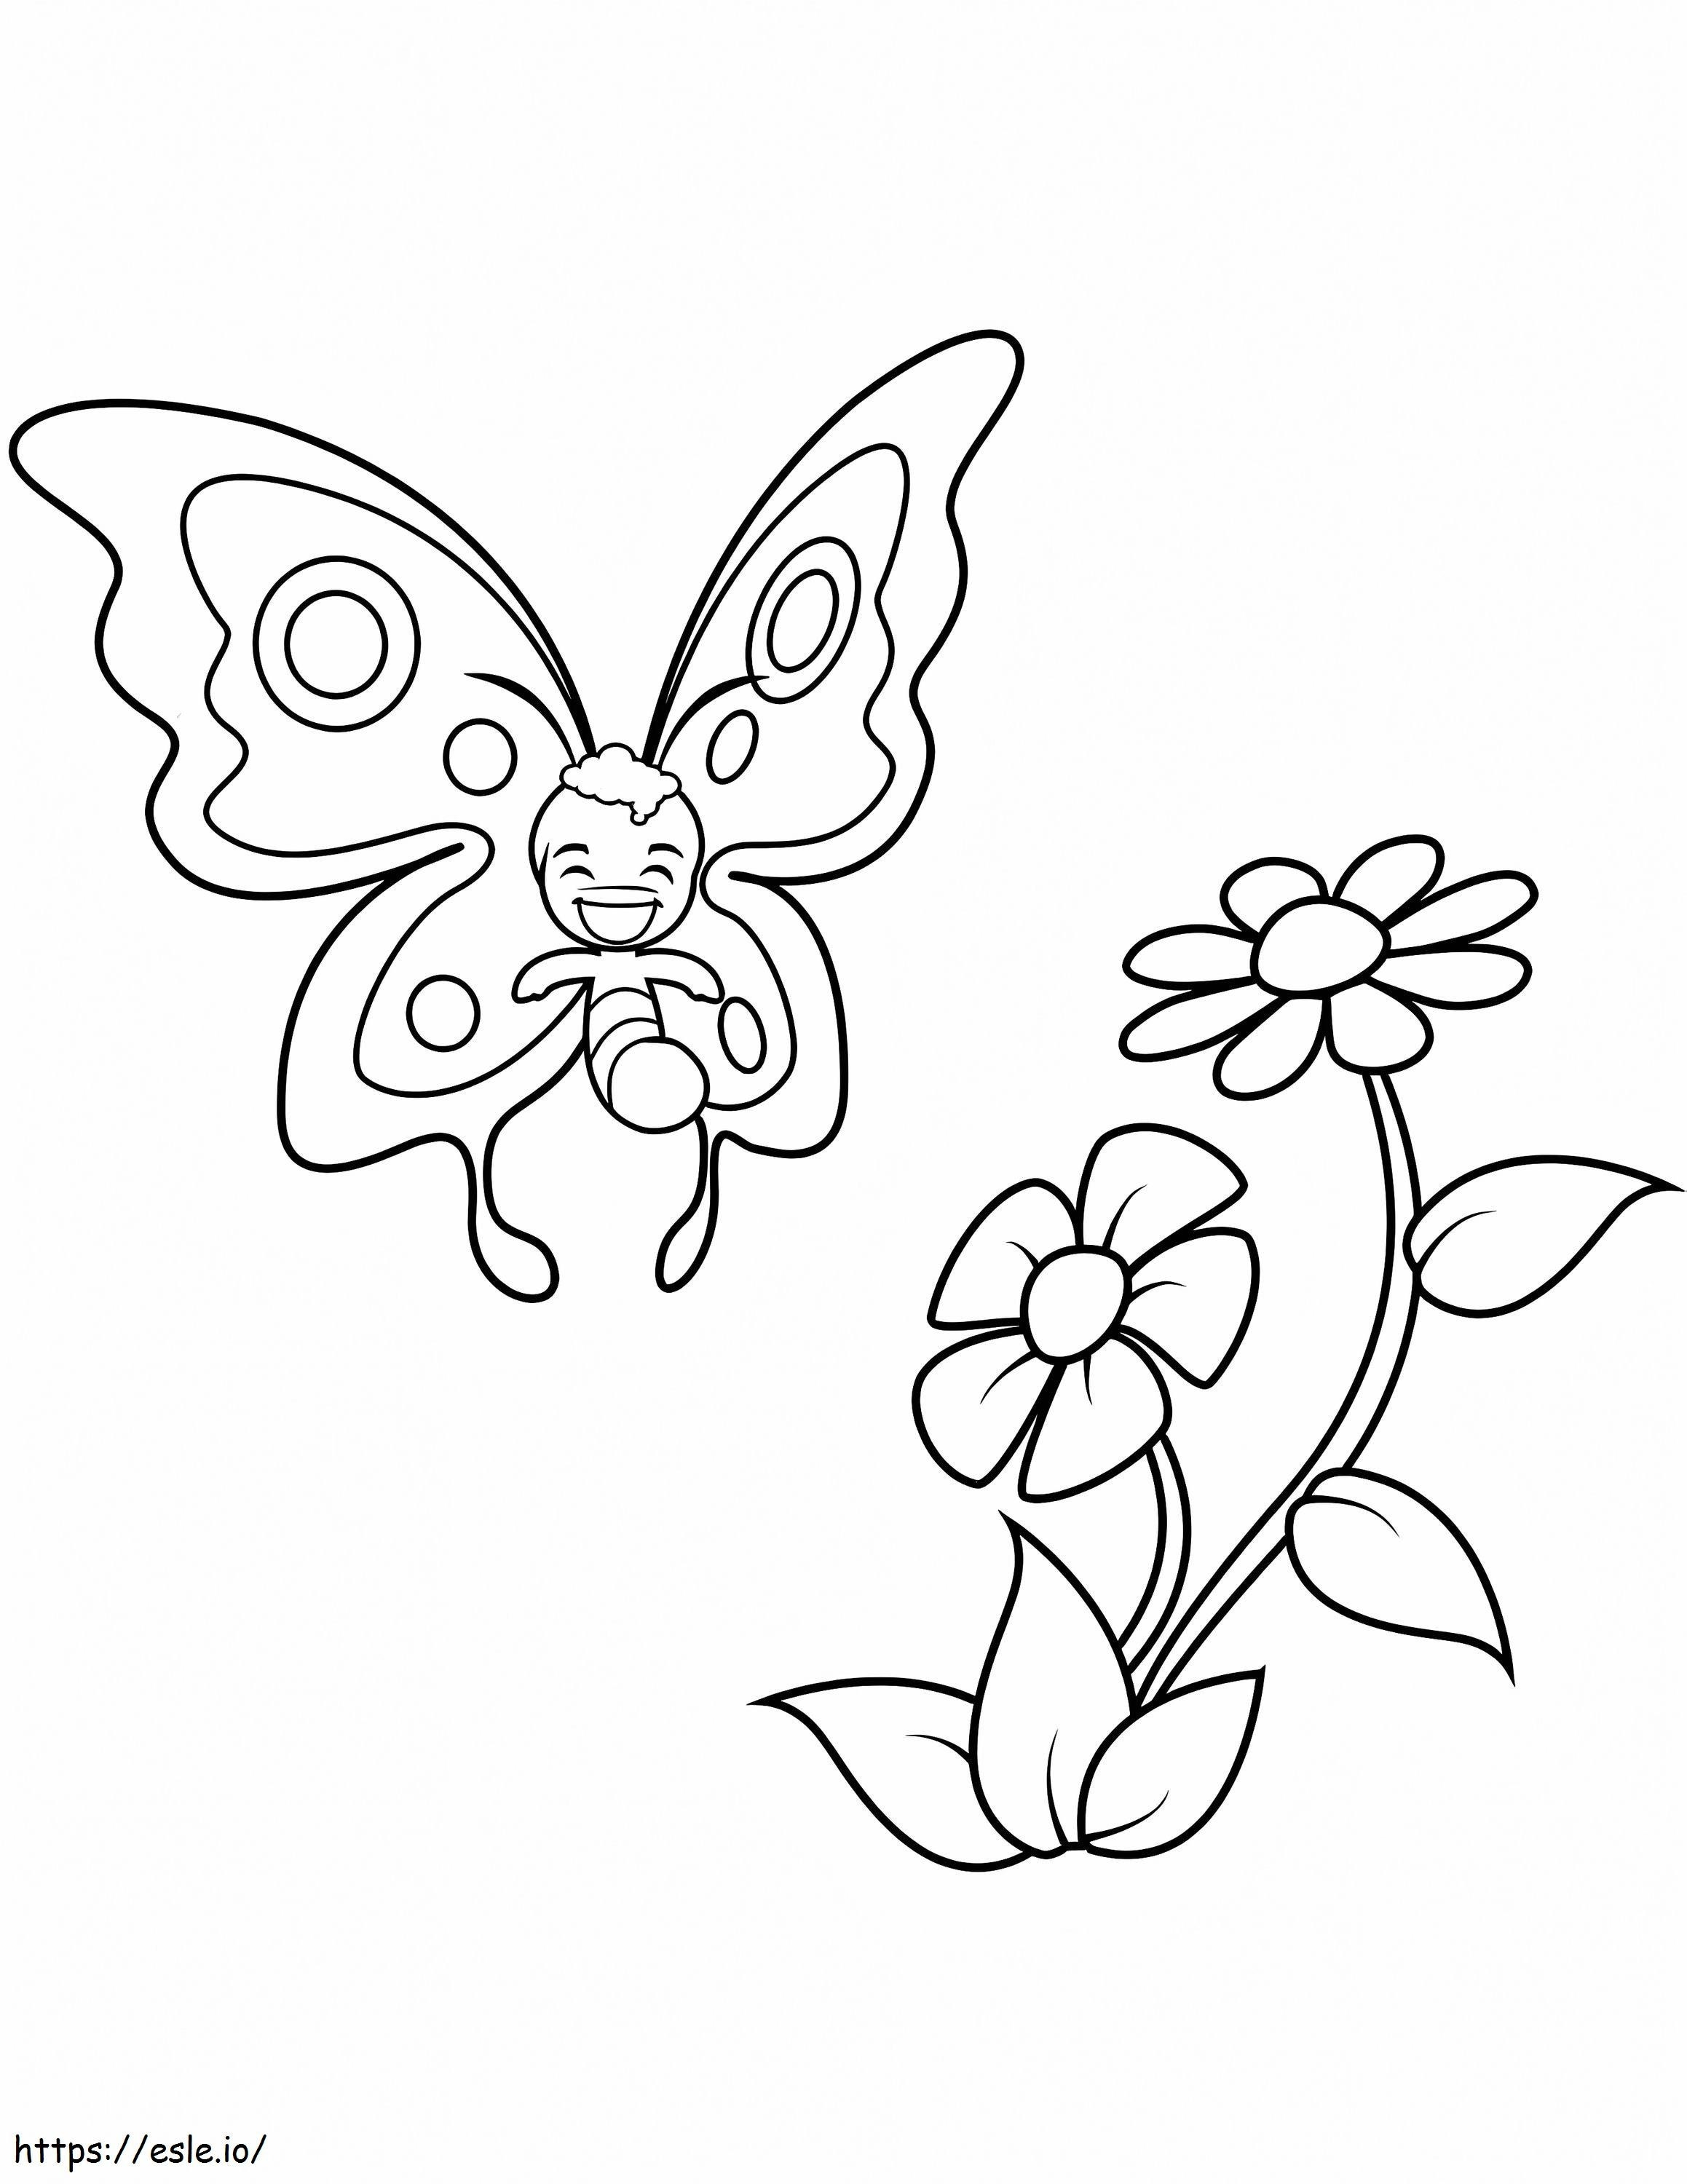 Papillon 2 coloring page